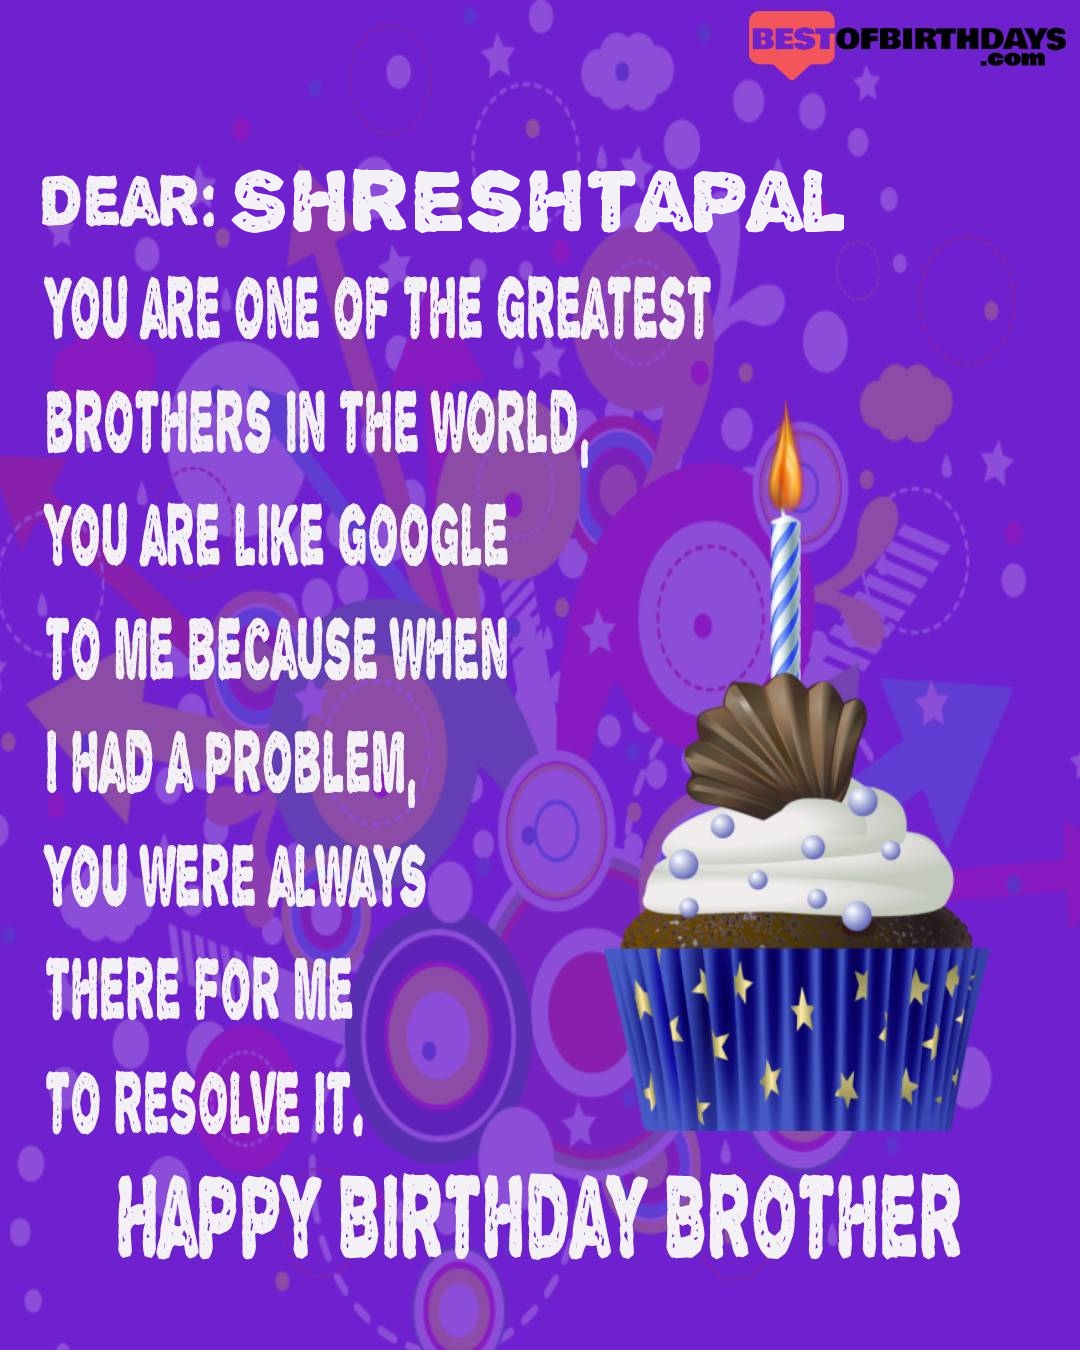 Happy birthday shreshtapal bhai brother bro